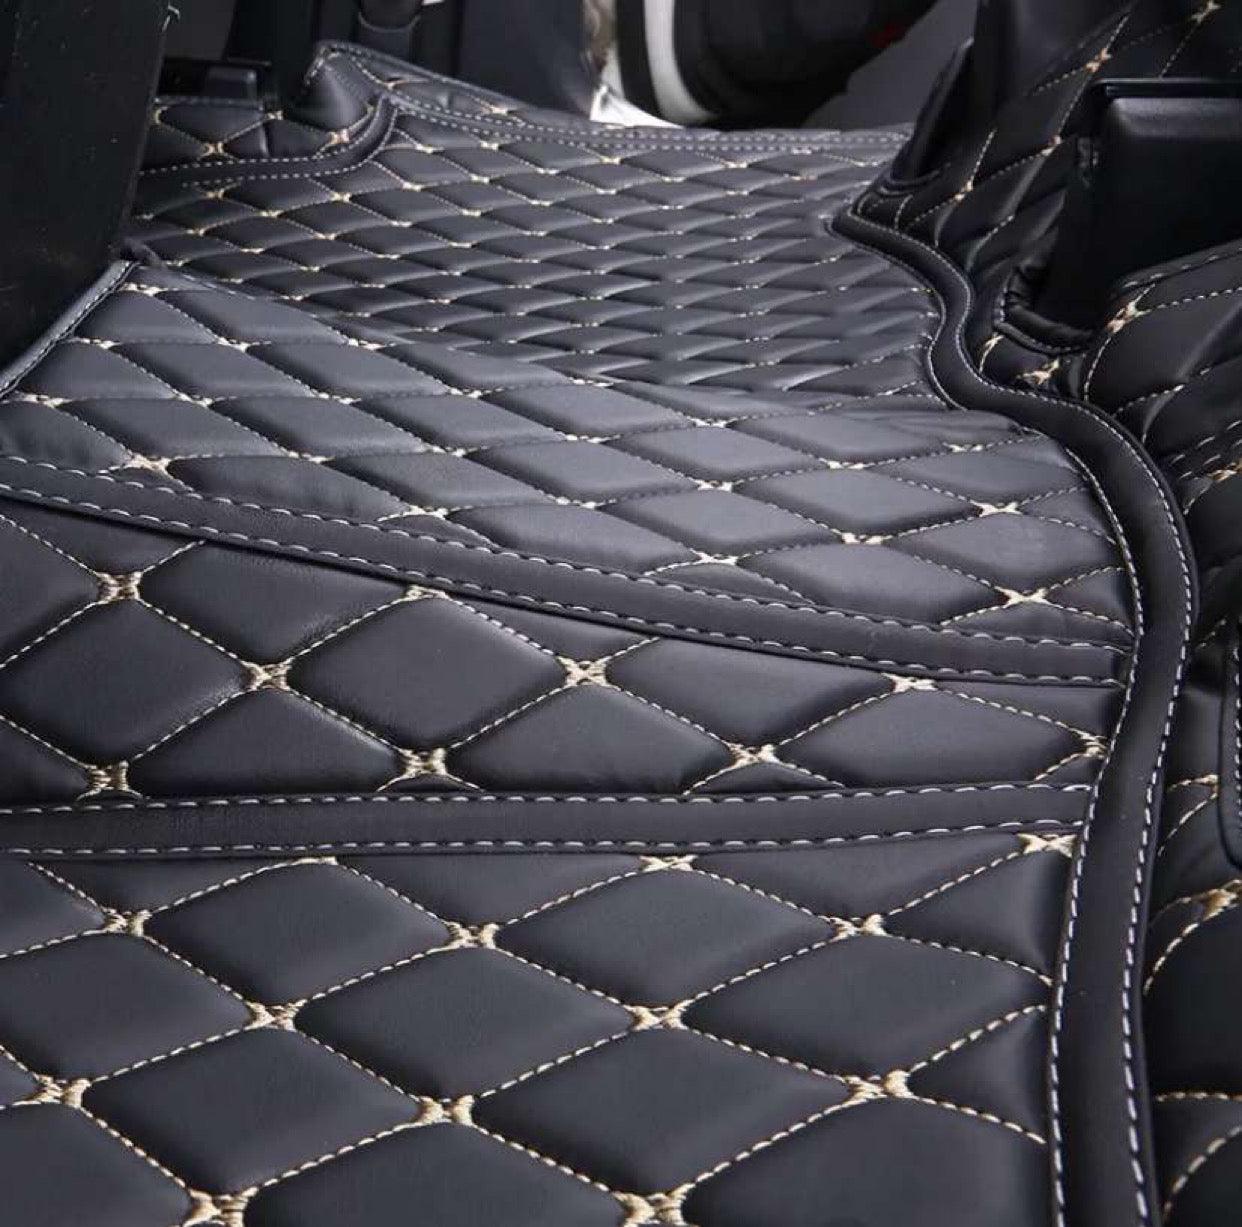 Diamond Stitch Car Mats - Custom Luxury Floor Mats Set